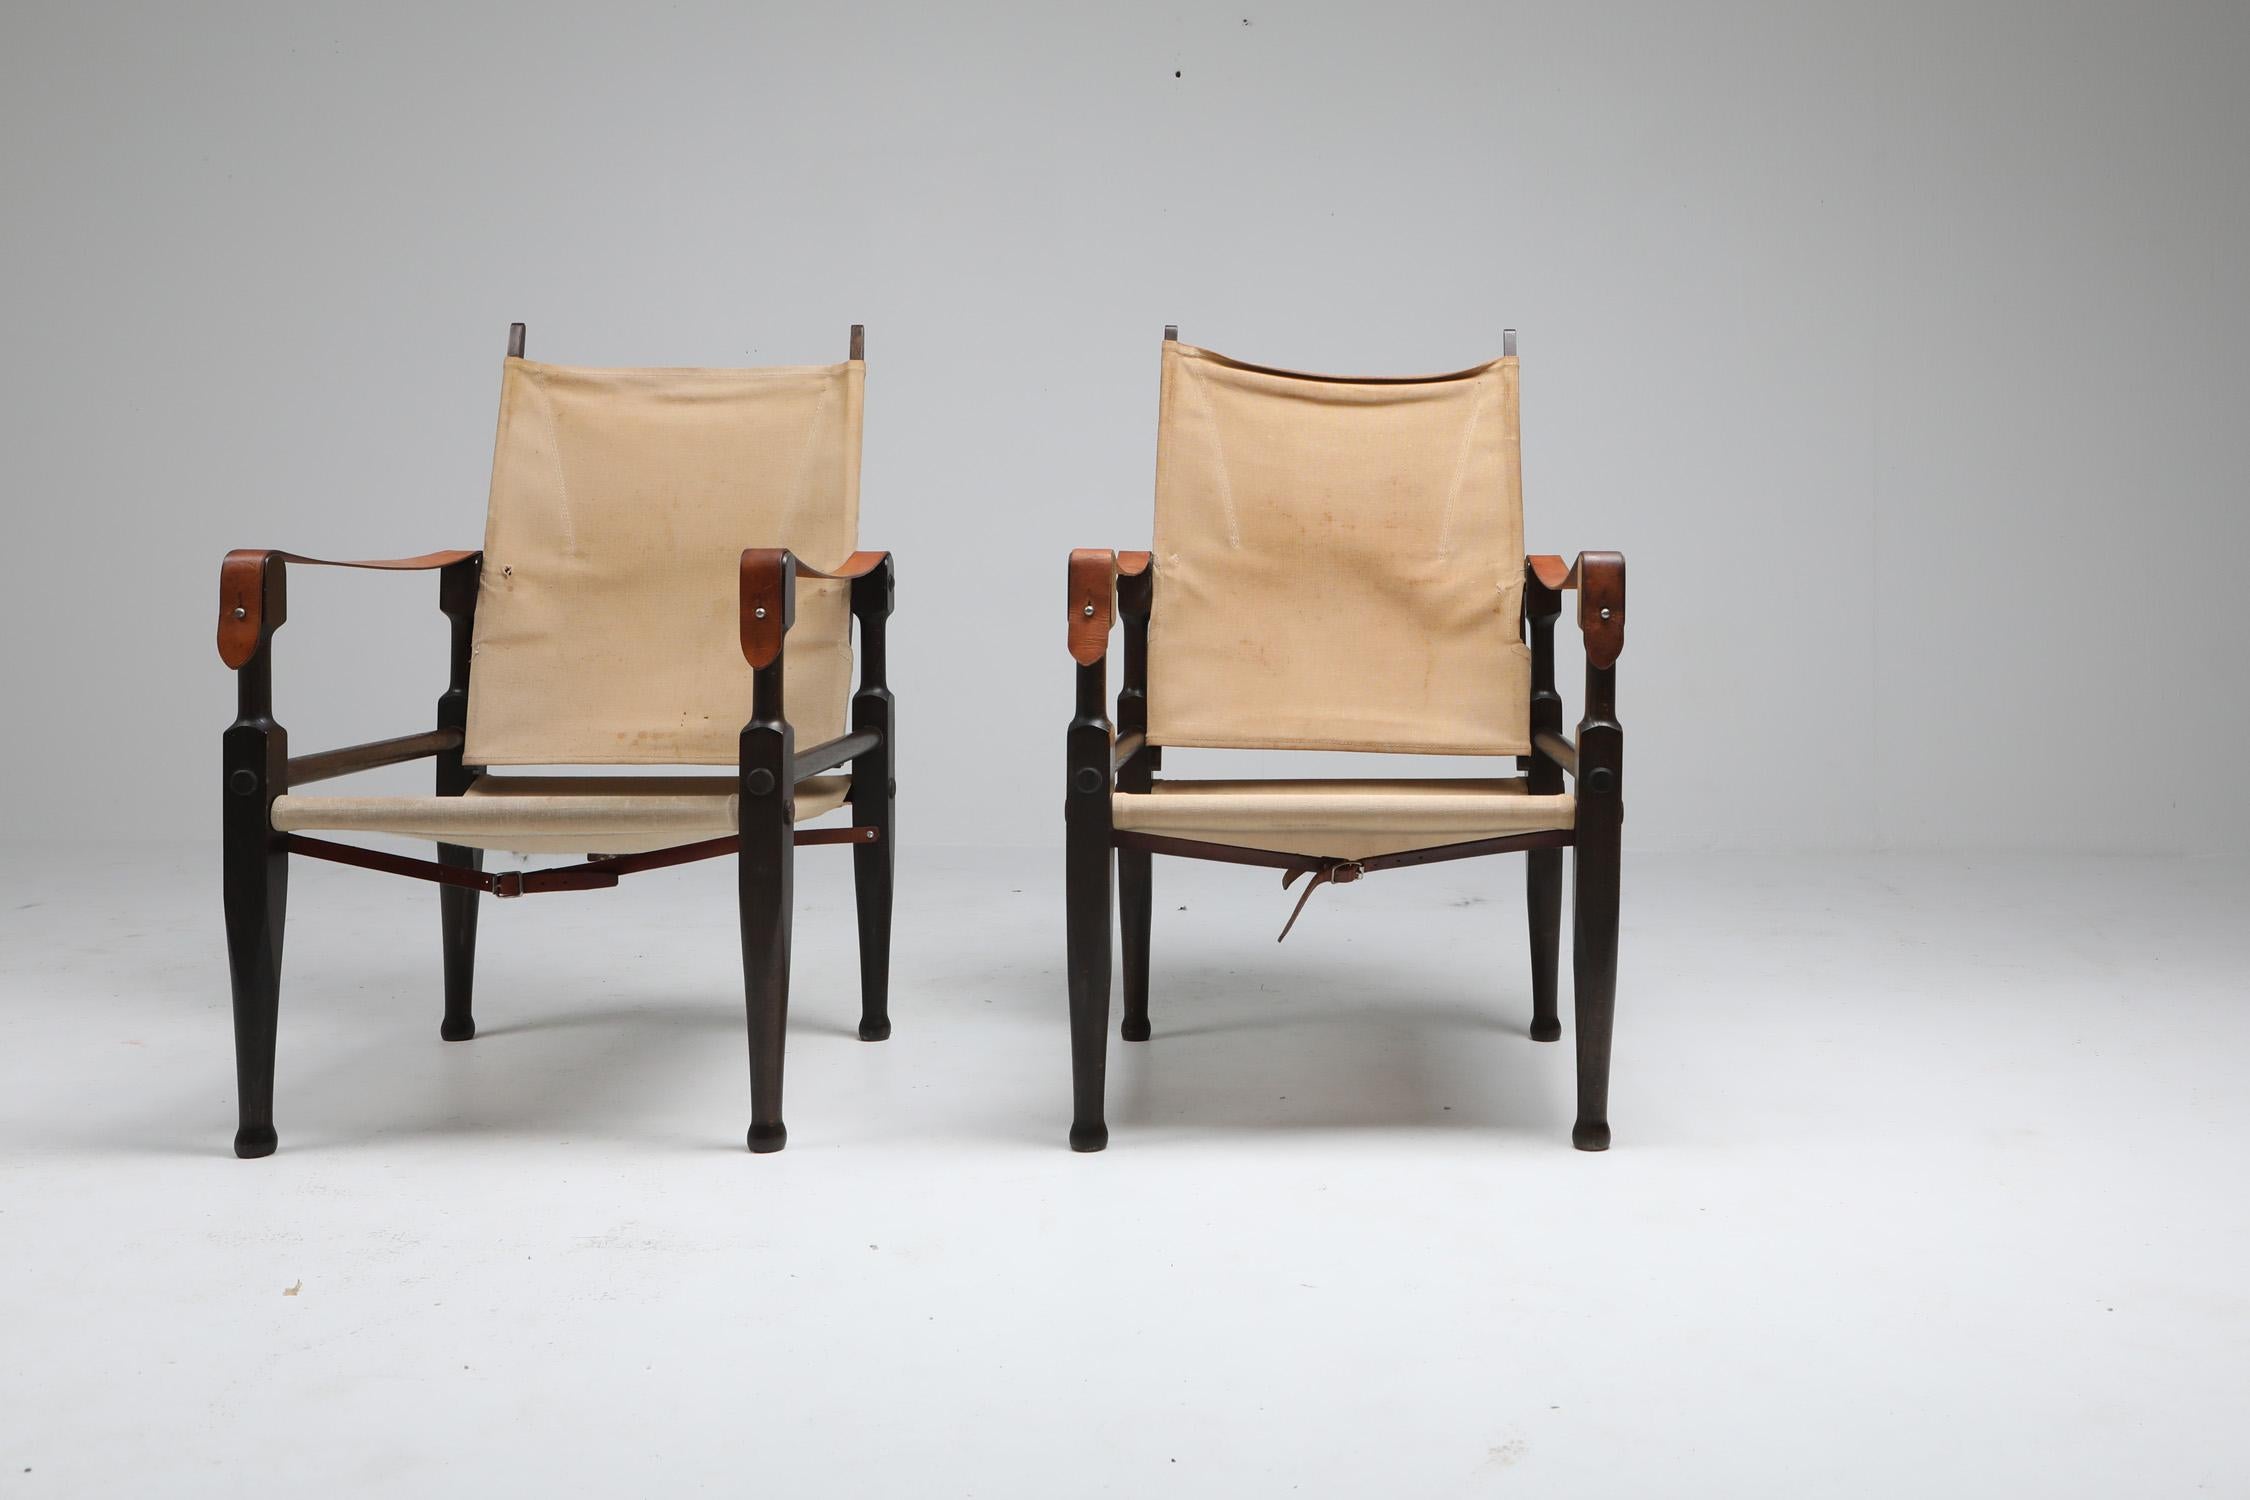 20th Century Safari Chairs Designed by Kaare Klint for Rud Rasmussen, Denmark, 1960s